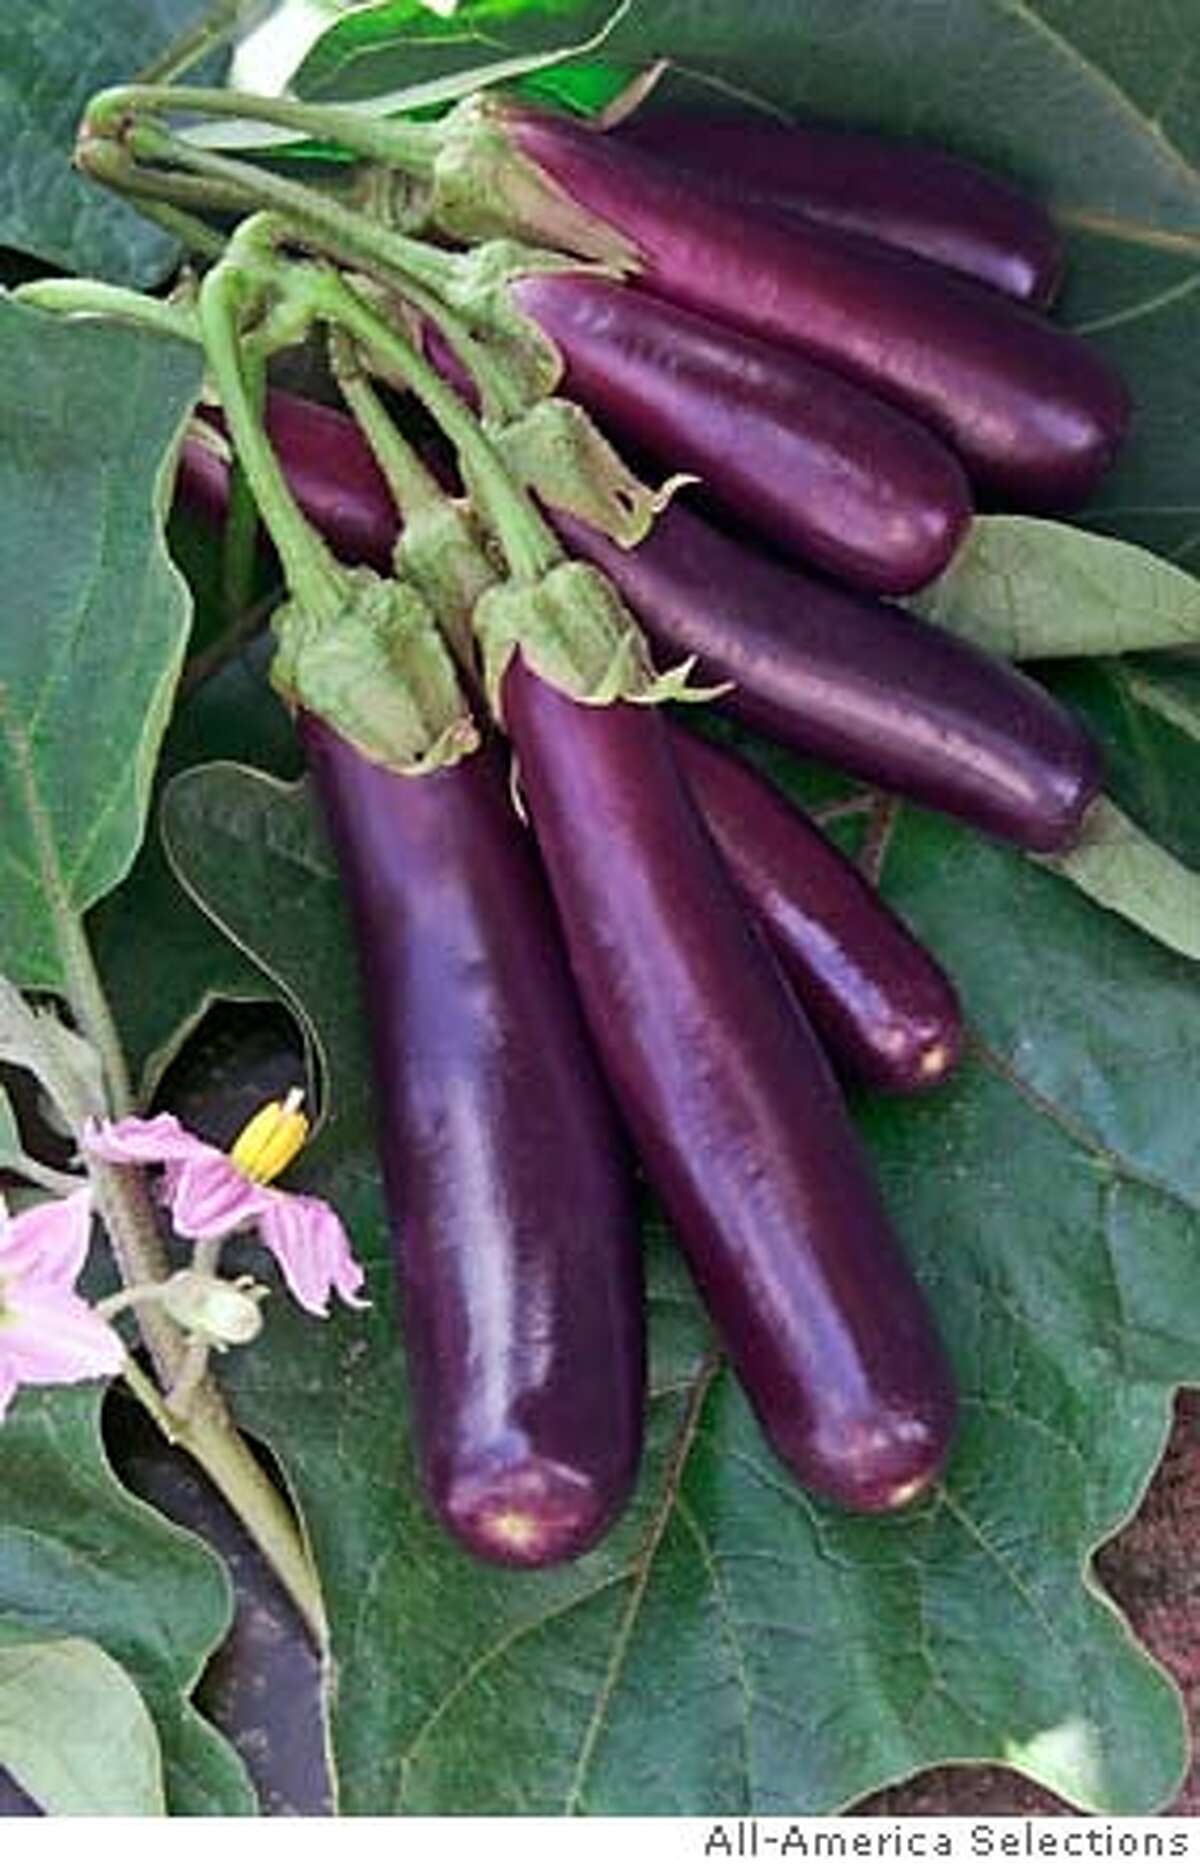 eggplant seedlings